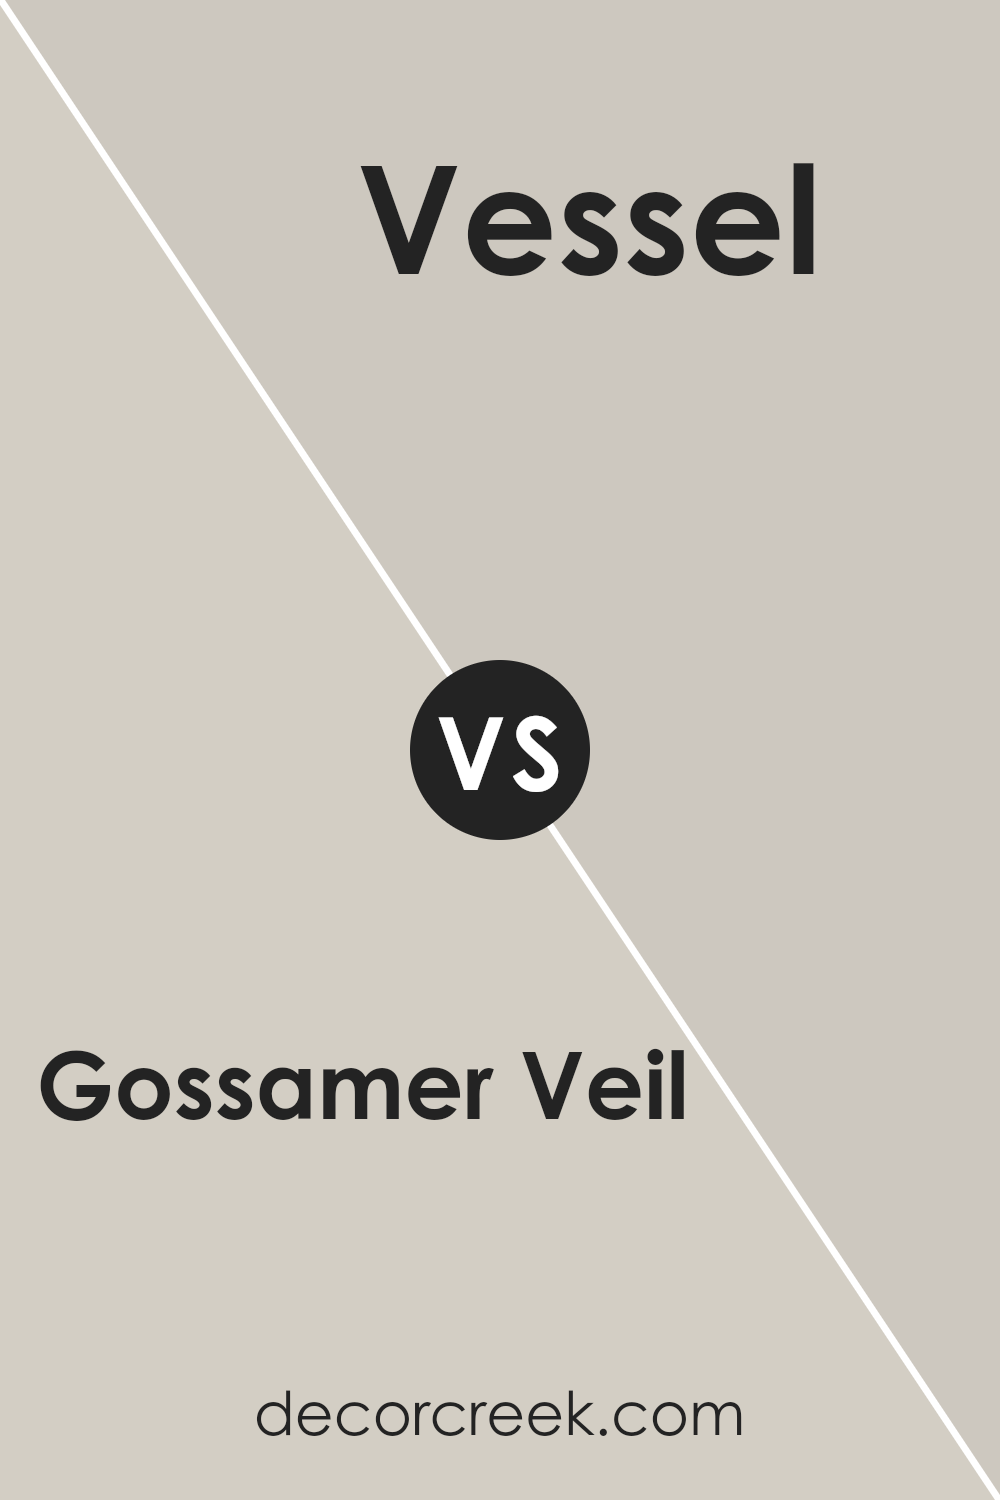 gossamer_veil_sw_9165_vs_vessel_sw_9547